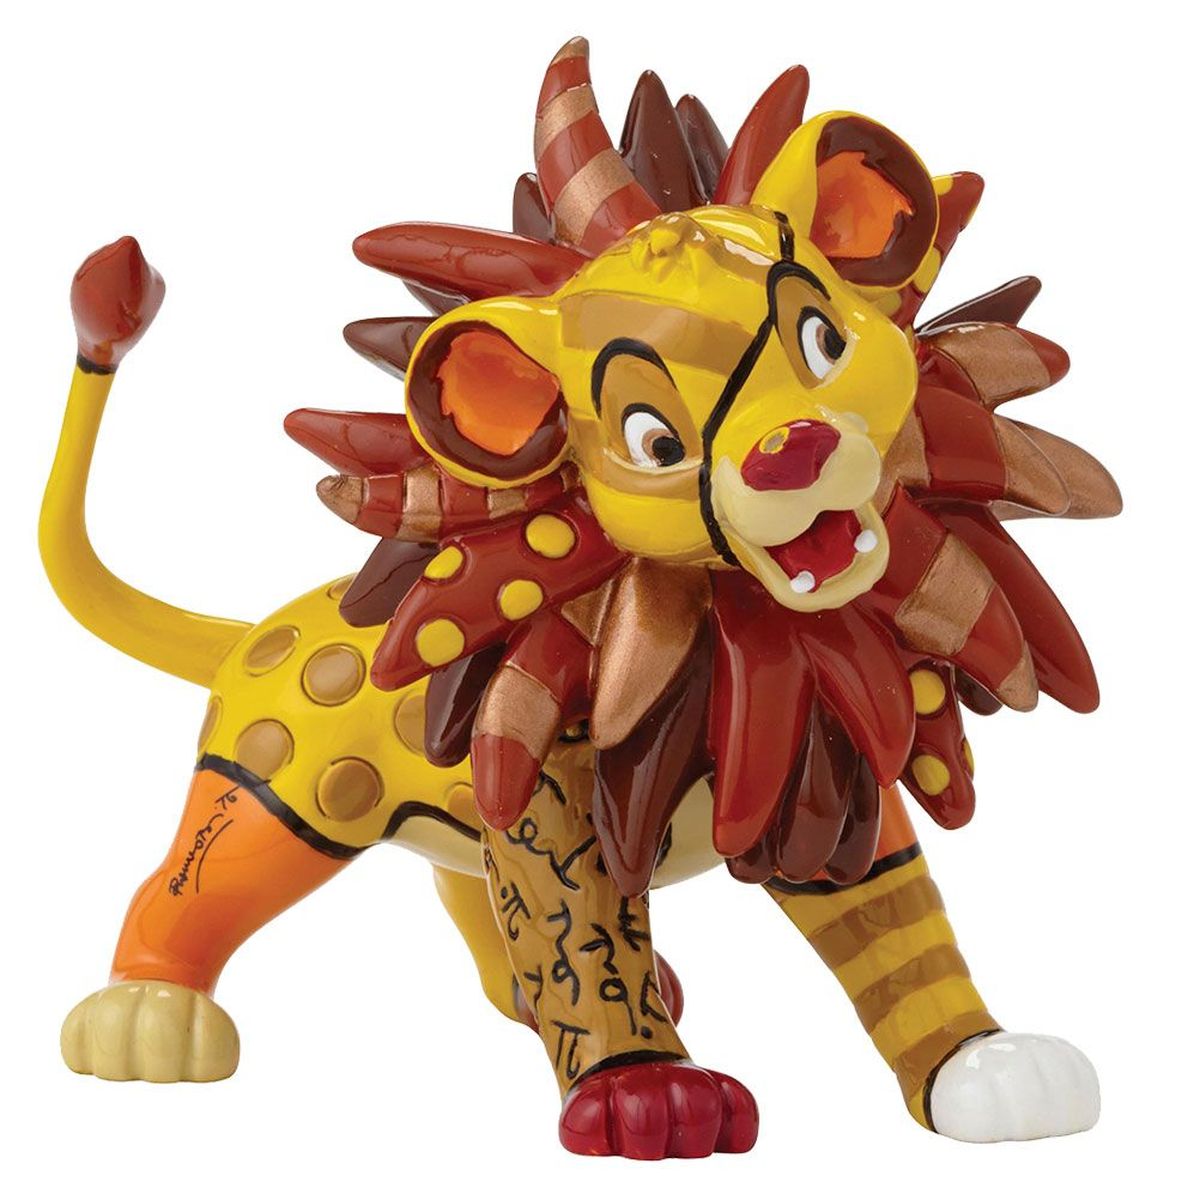 Figurine Le roi Lion Disney - Simba par Britto